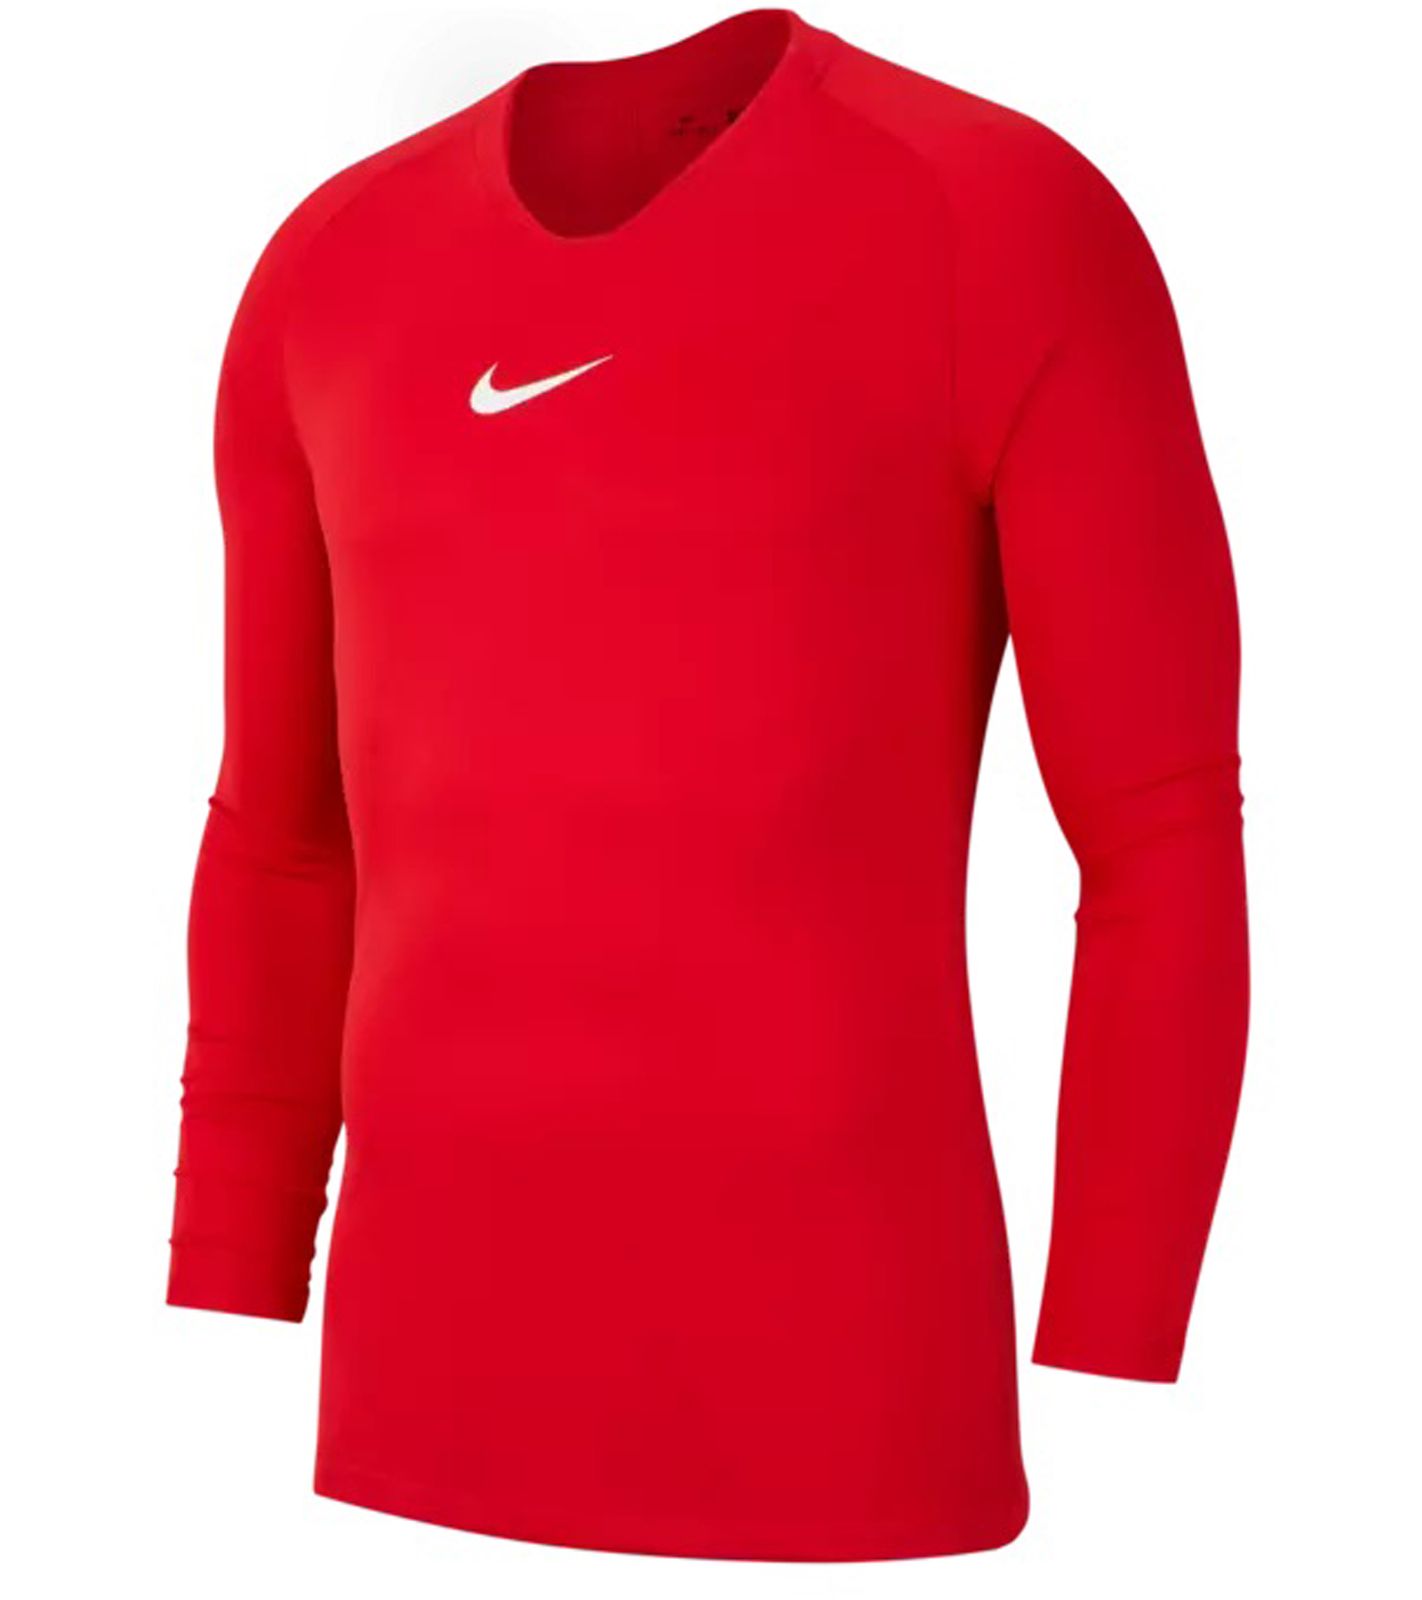 NIKE Performance Dry Park sportliches Langarm-Shirt mit Dry-Fit Technologie AV2609-657 Rot von NIKE